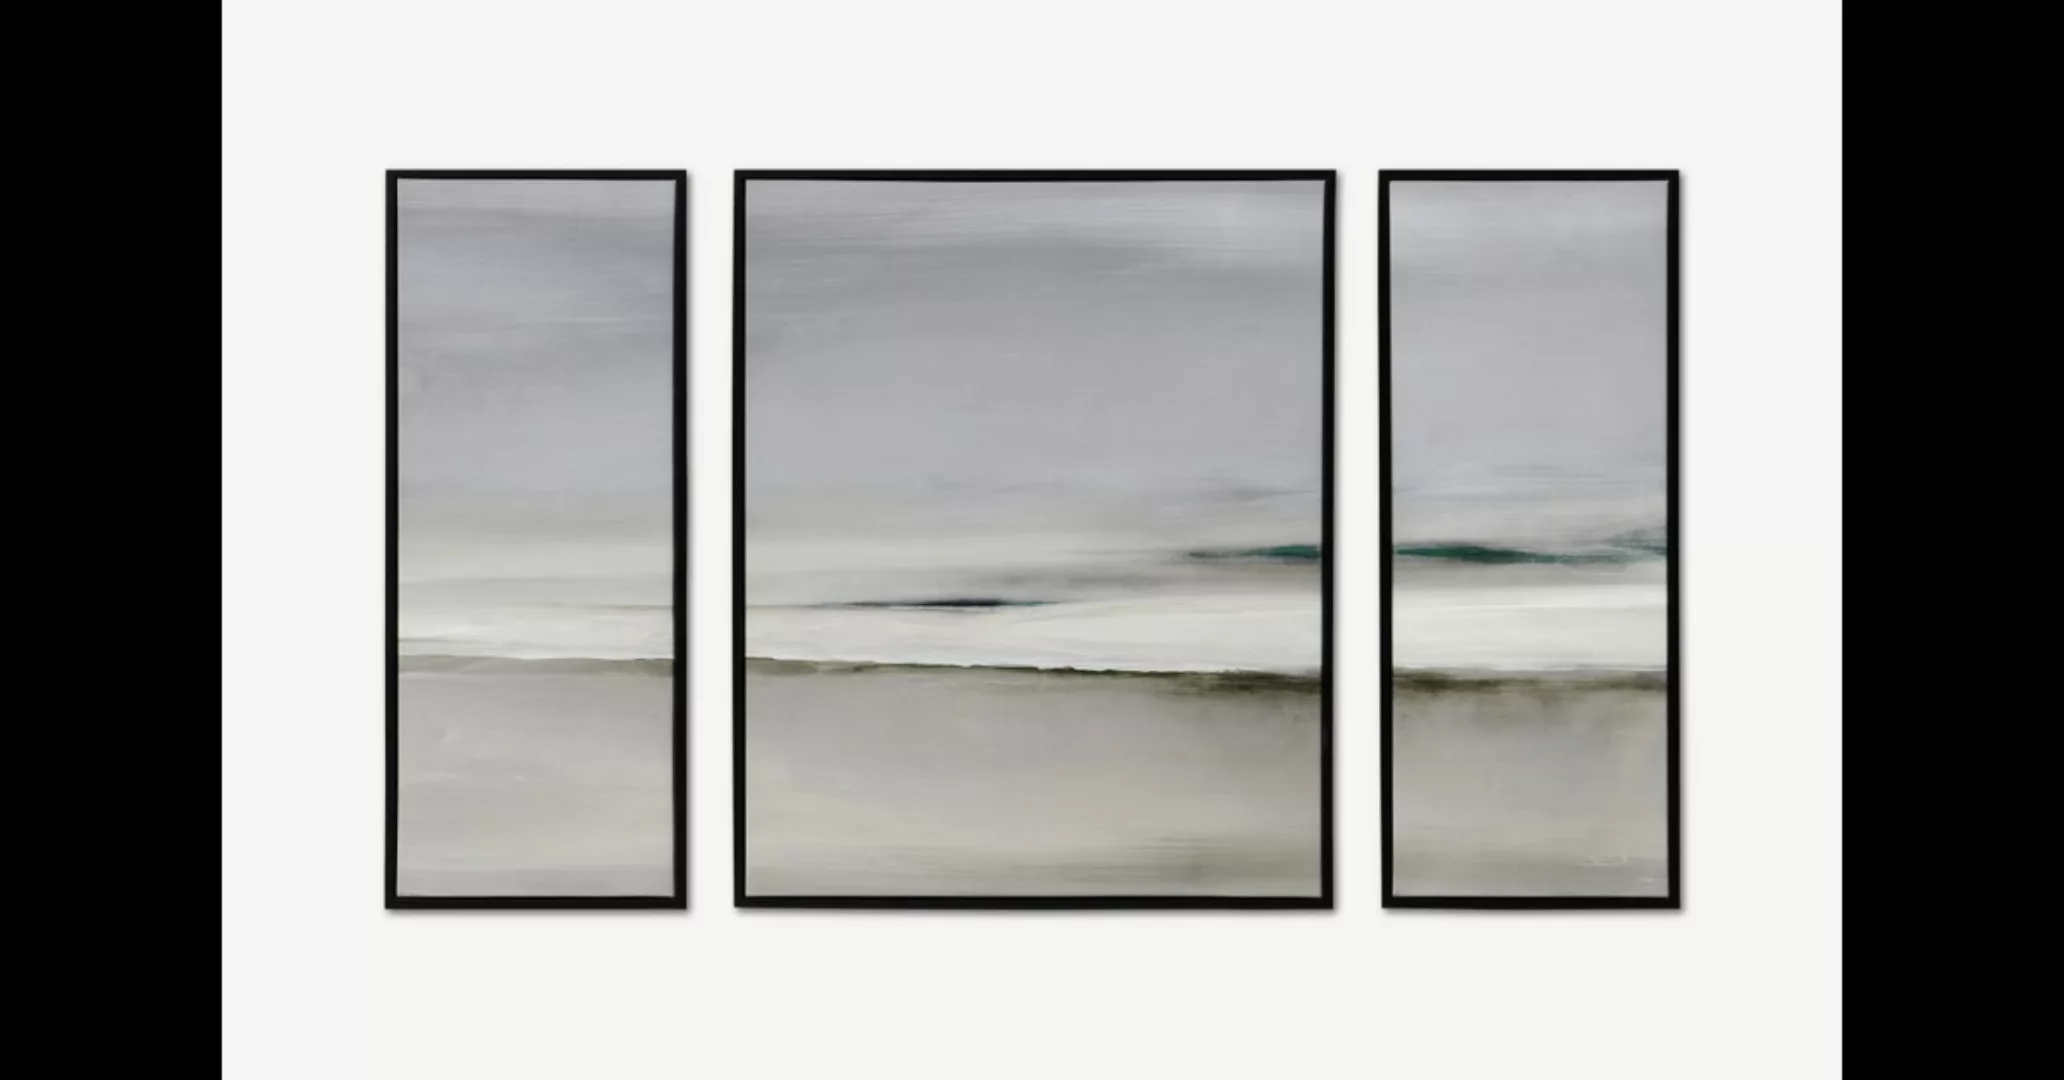 3 x Dan Hobday 'Calm' gerahmte Leinwaende (60 x 100 cm) - MADE.com günstig online kaufen